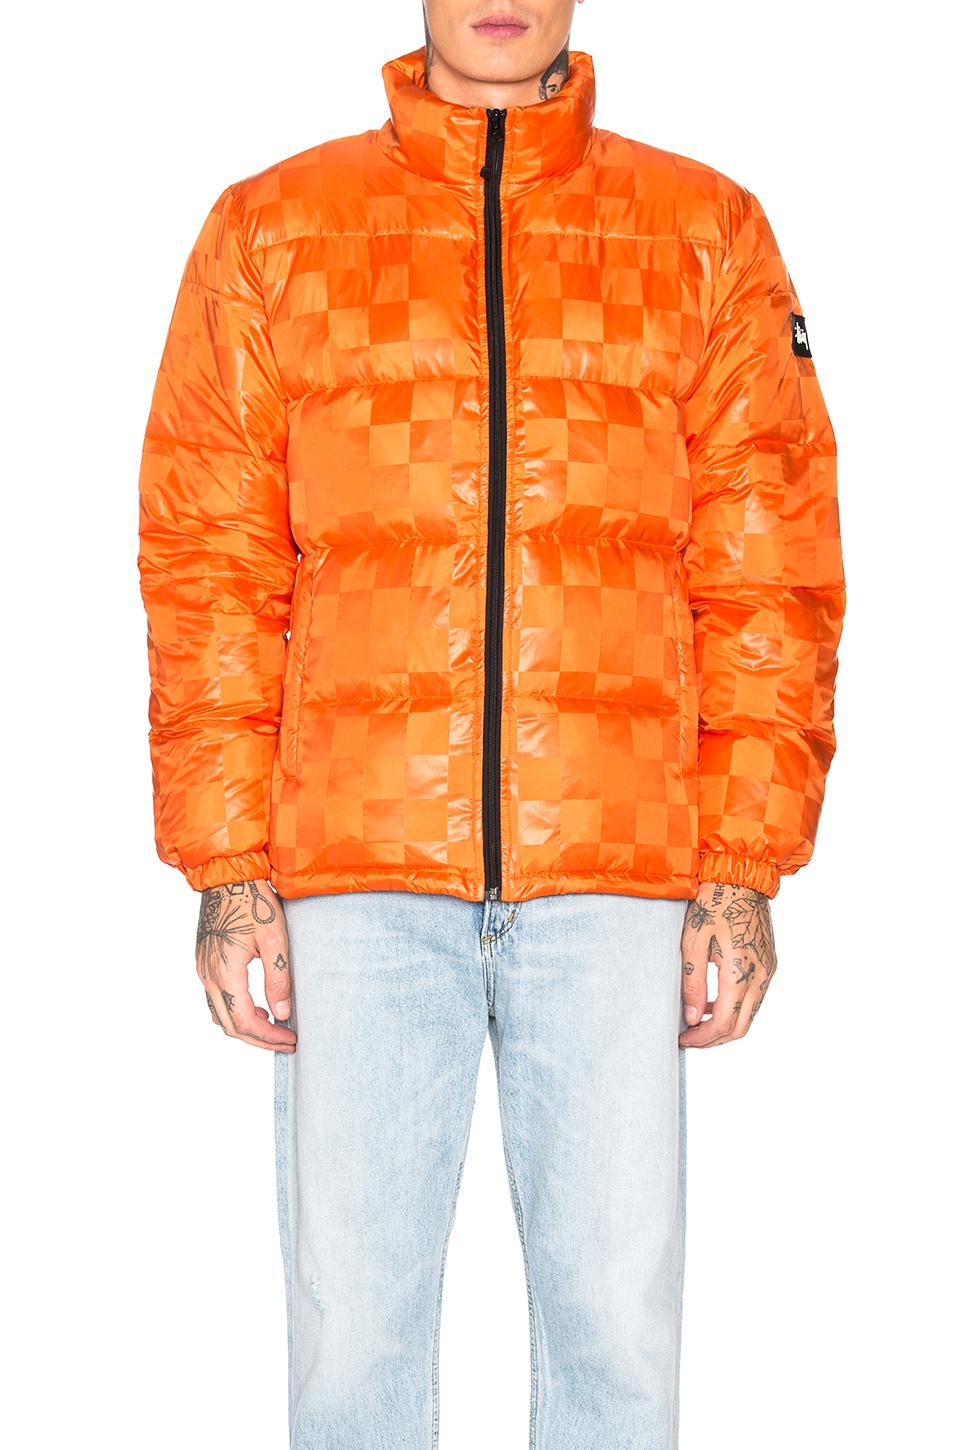 Stussy Puffer Jacket in Orange for Men - Lyst